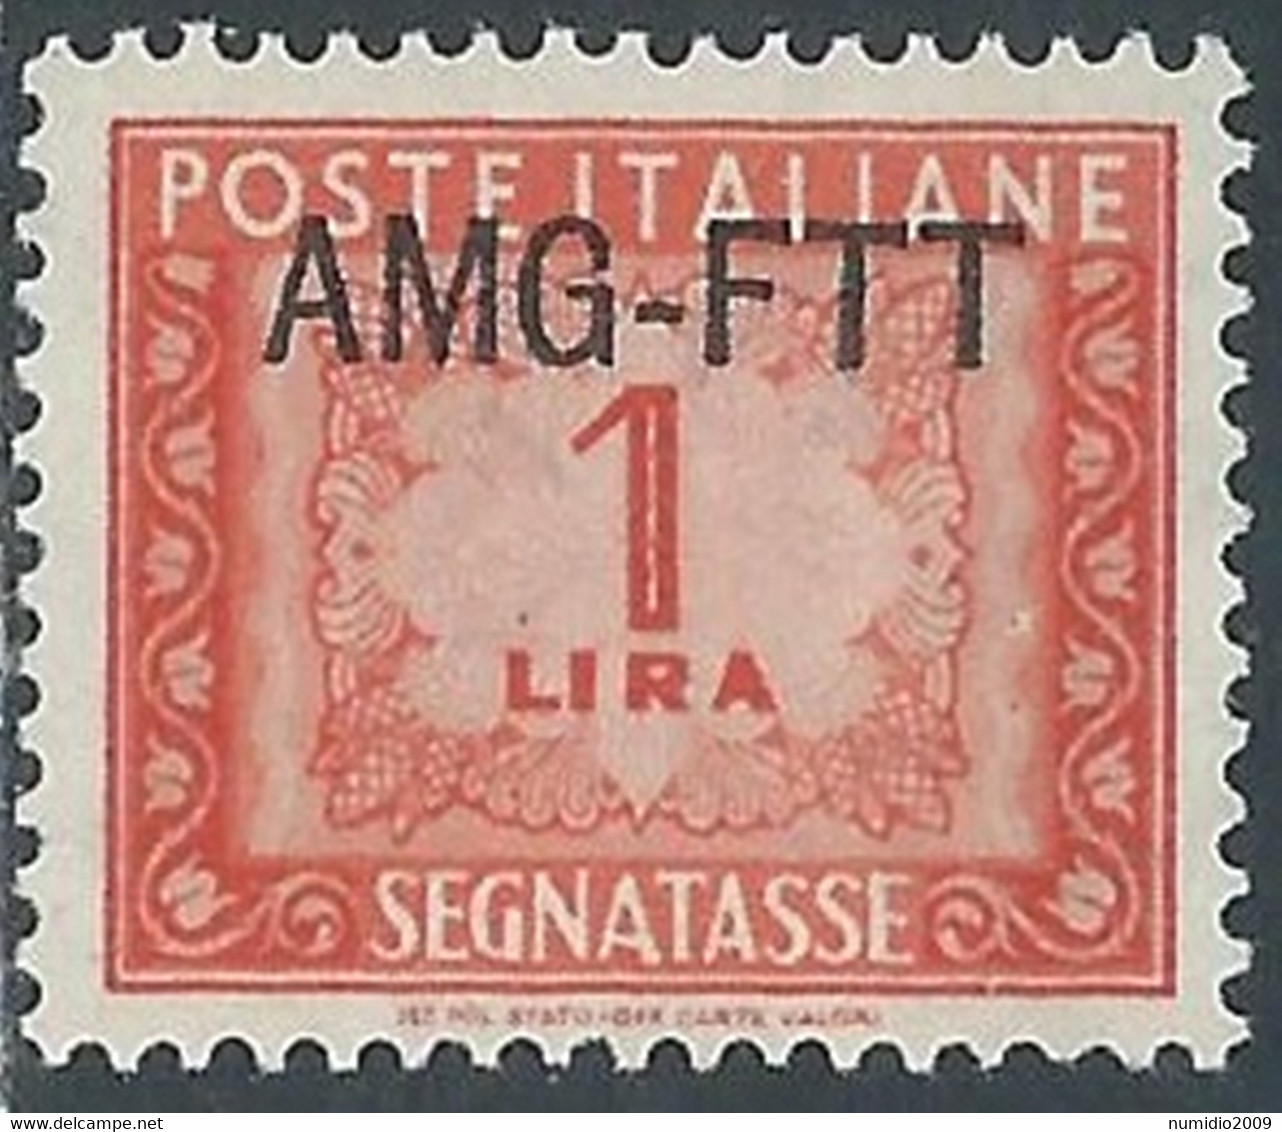 1949-54 TRIESTE A SEGNATASSE 1 LIRA MNH ** - RE8-4 - Postage Due